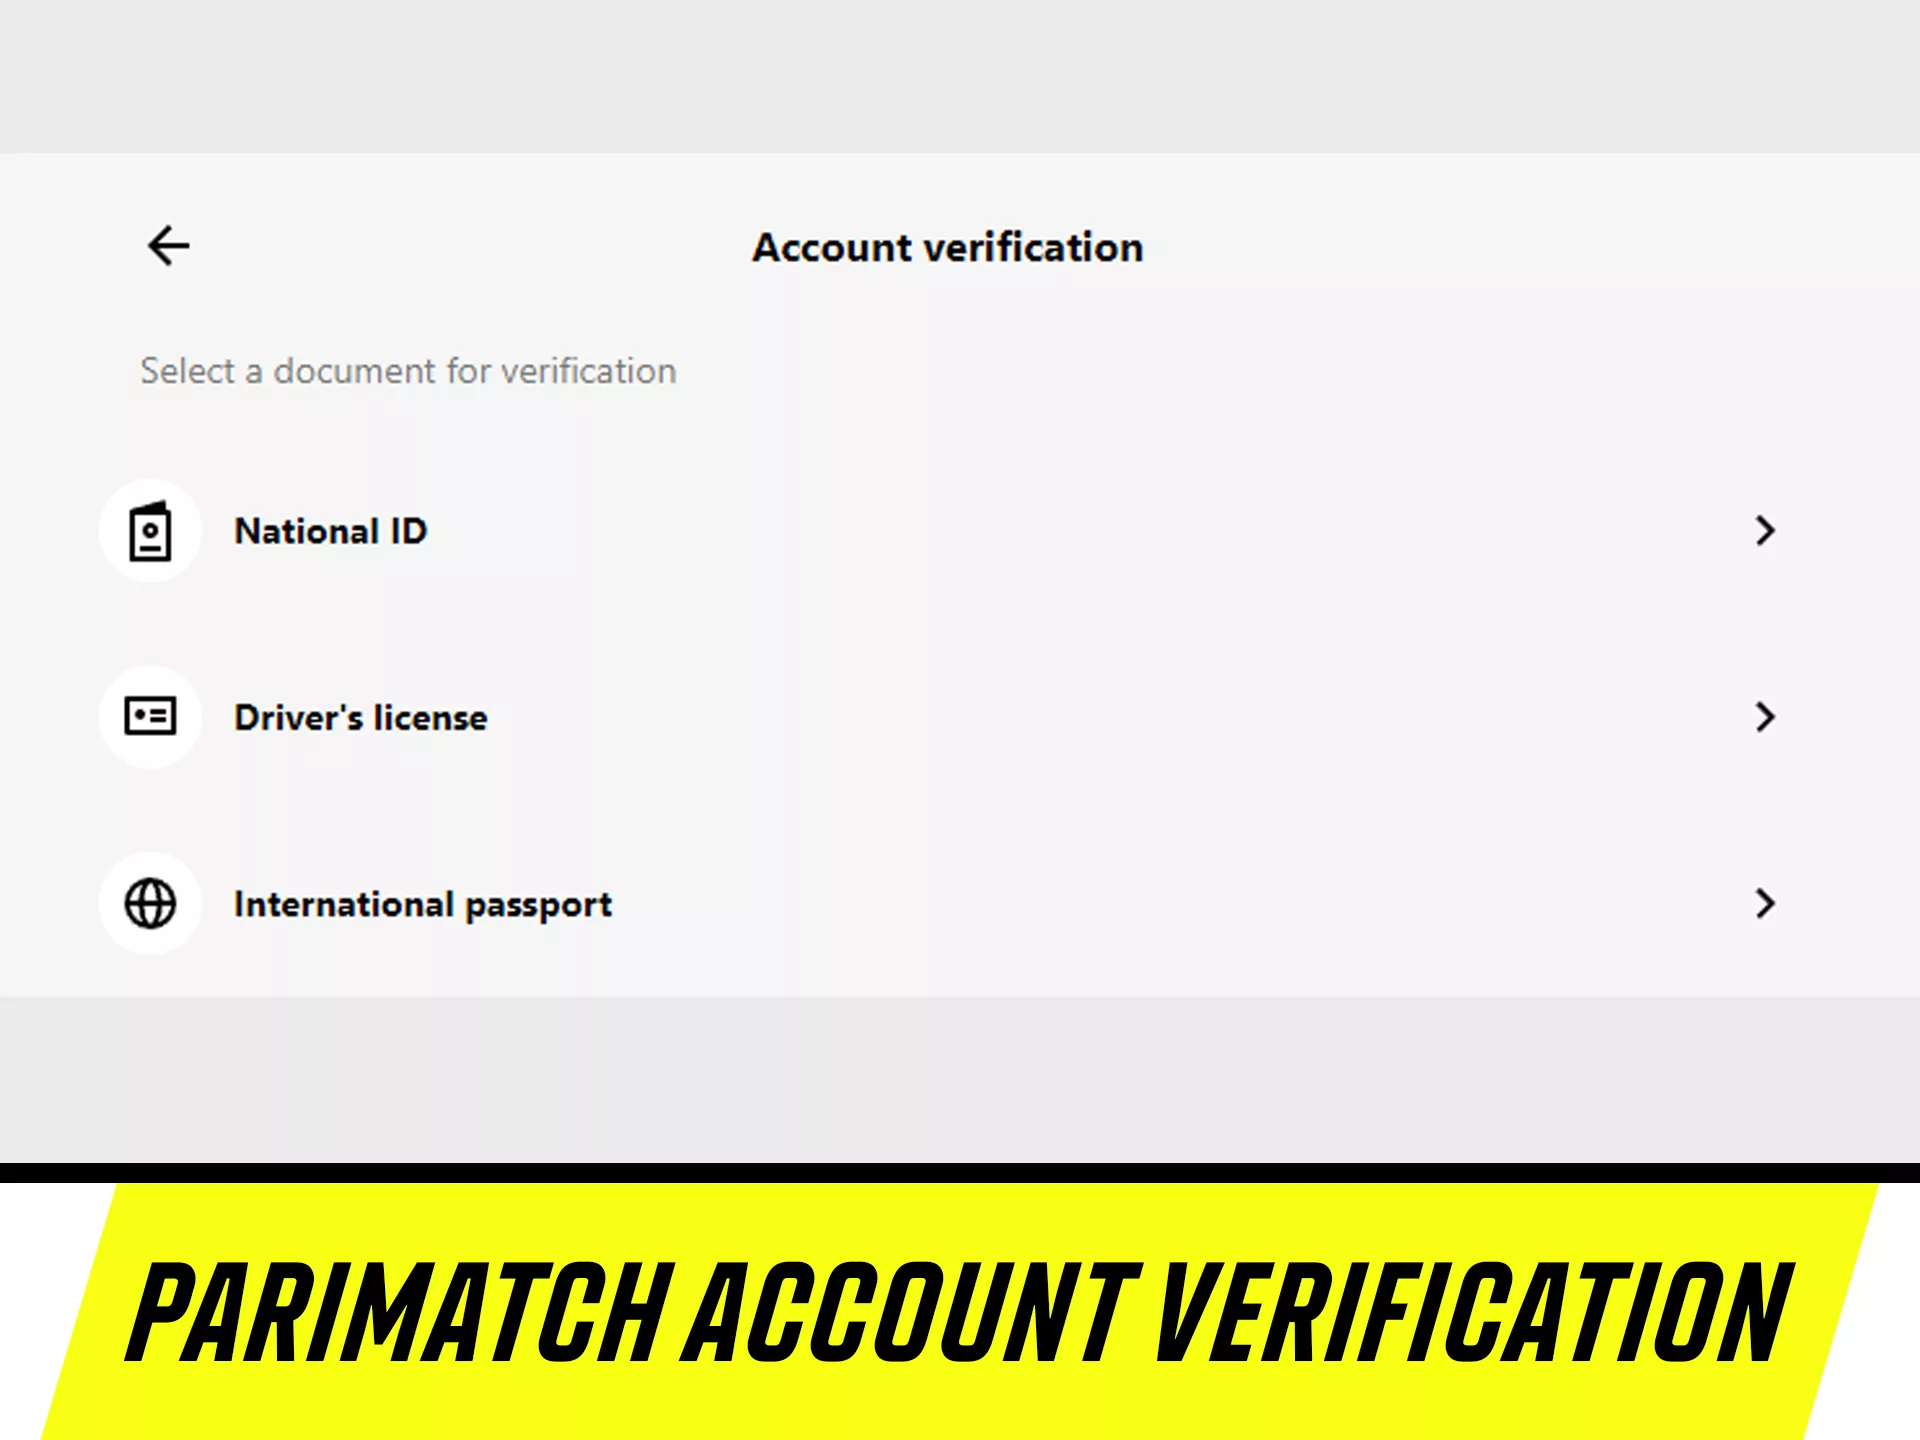 Verify you account by sending document.